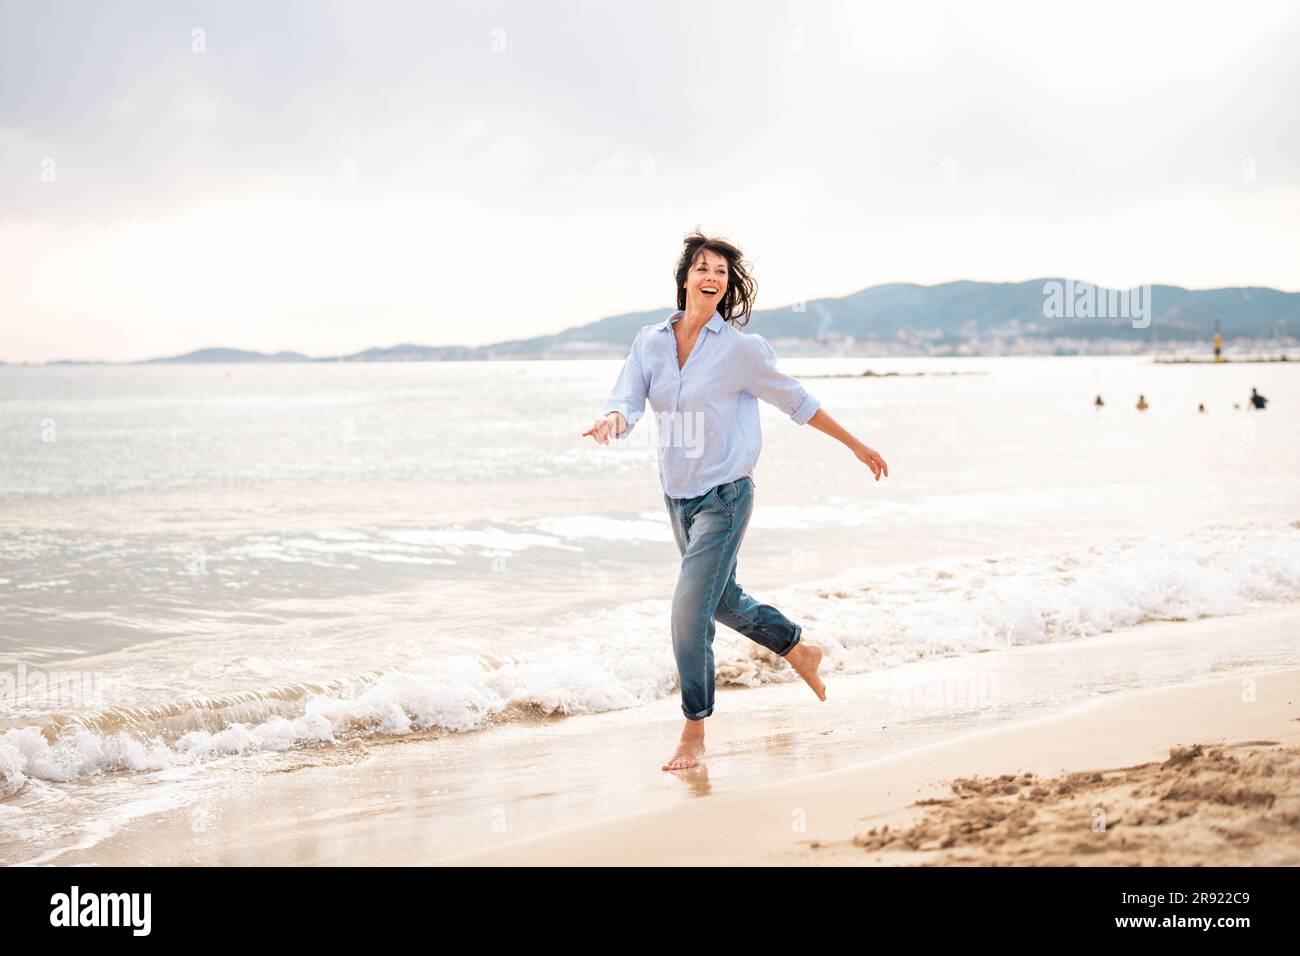 Carefree woman running near shore at beach Stock Photo